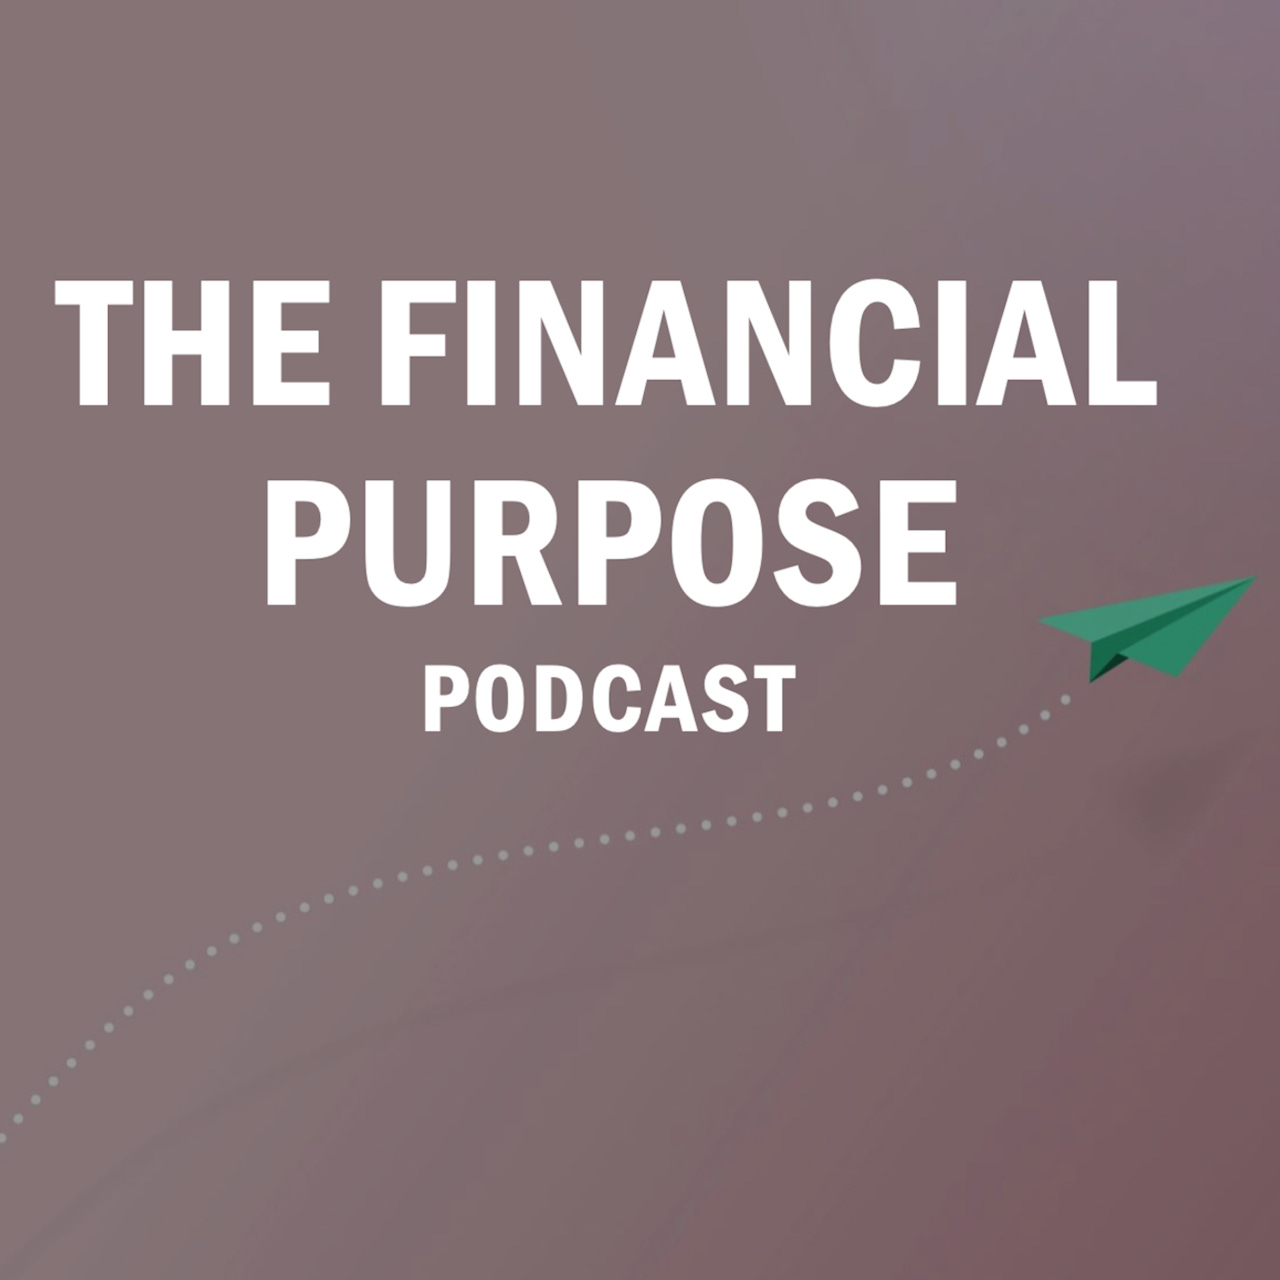 The Financial Purpose